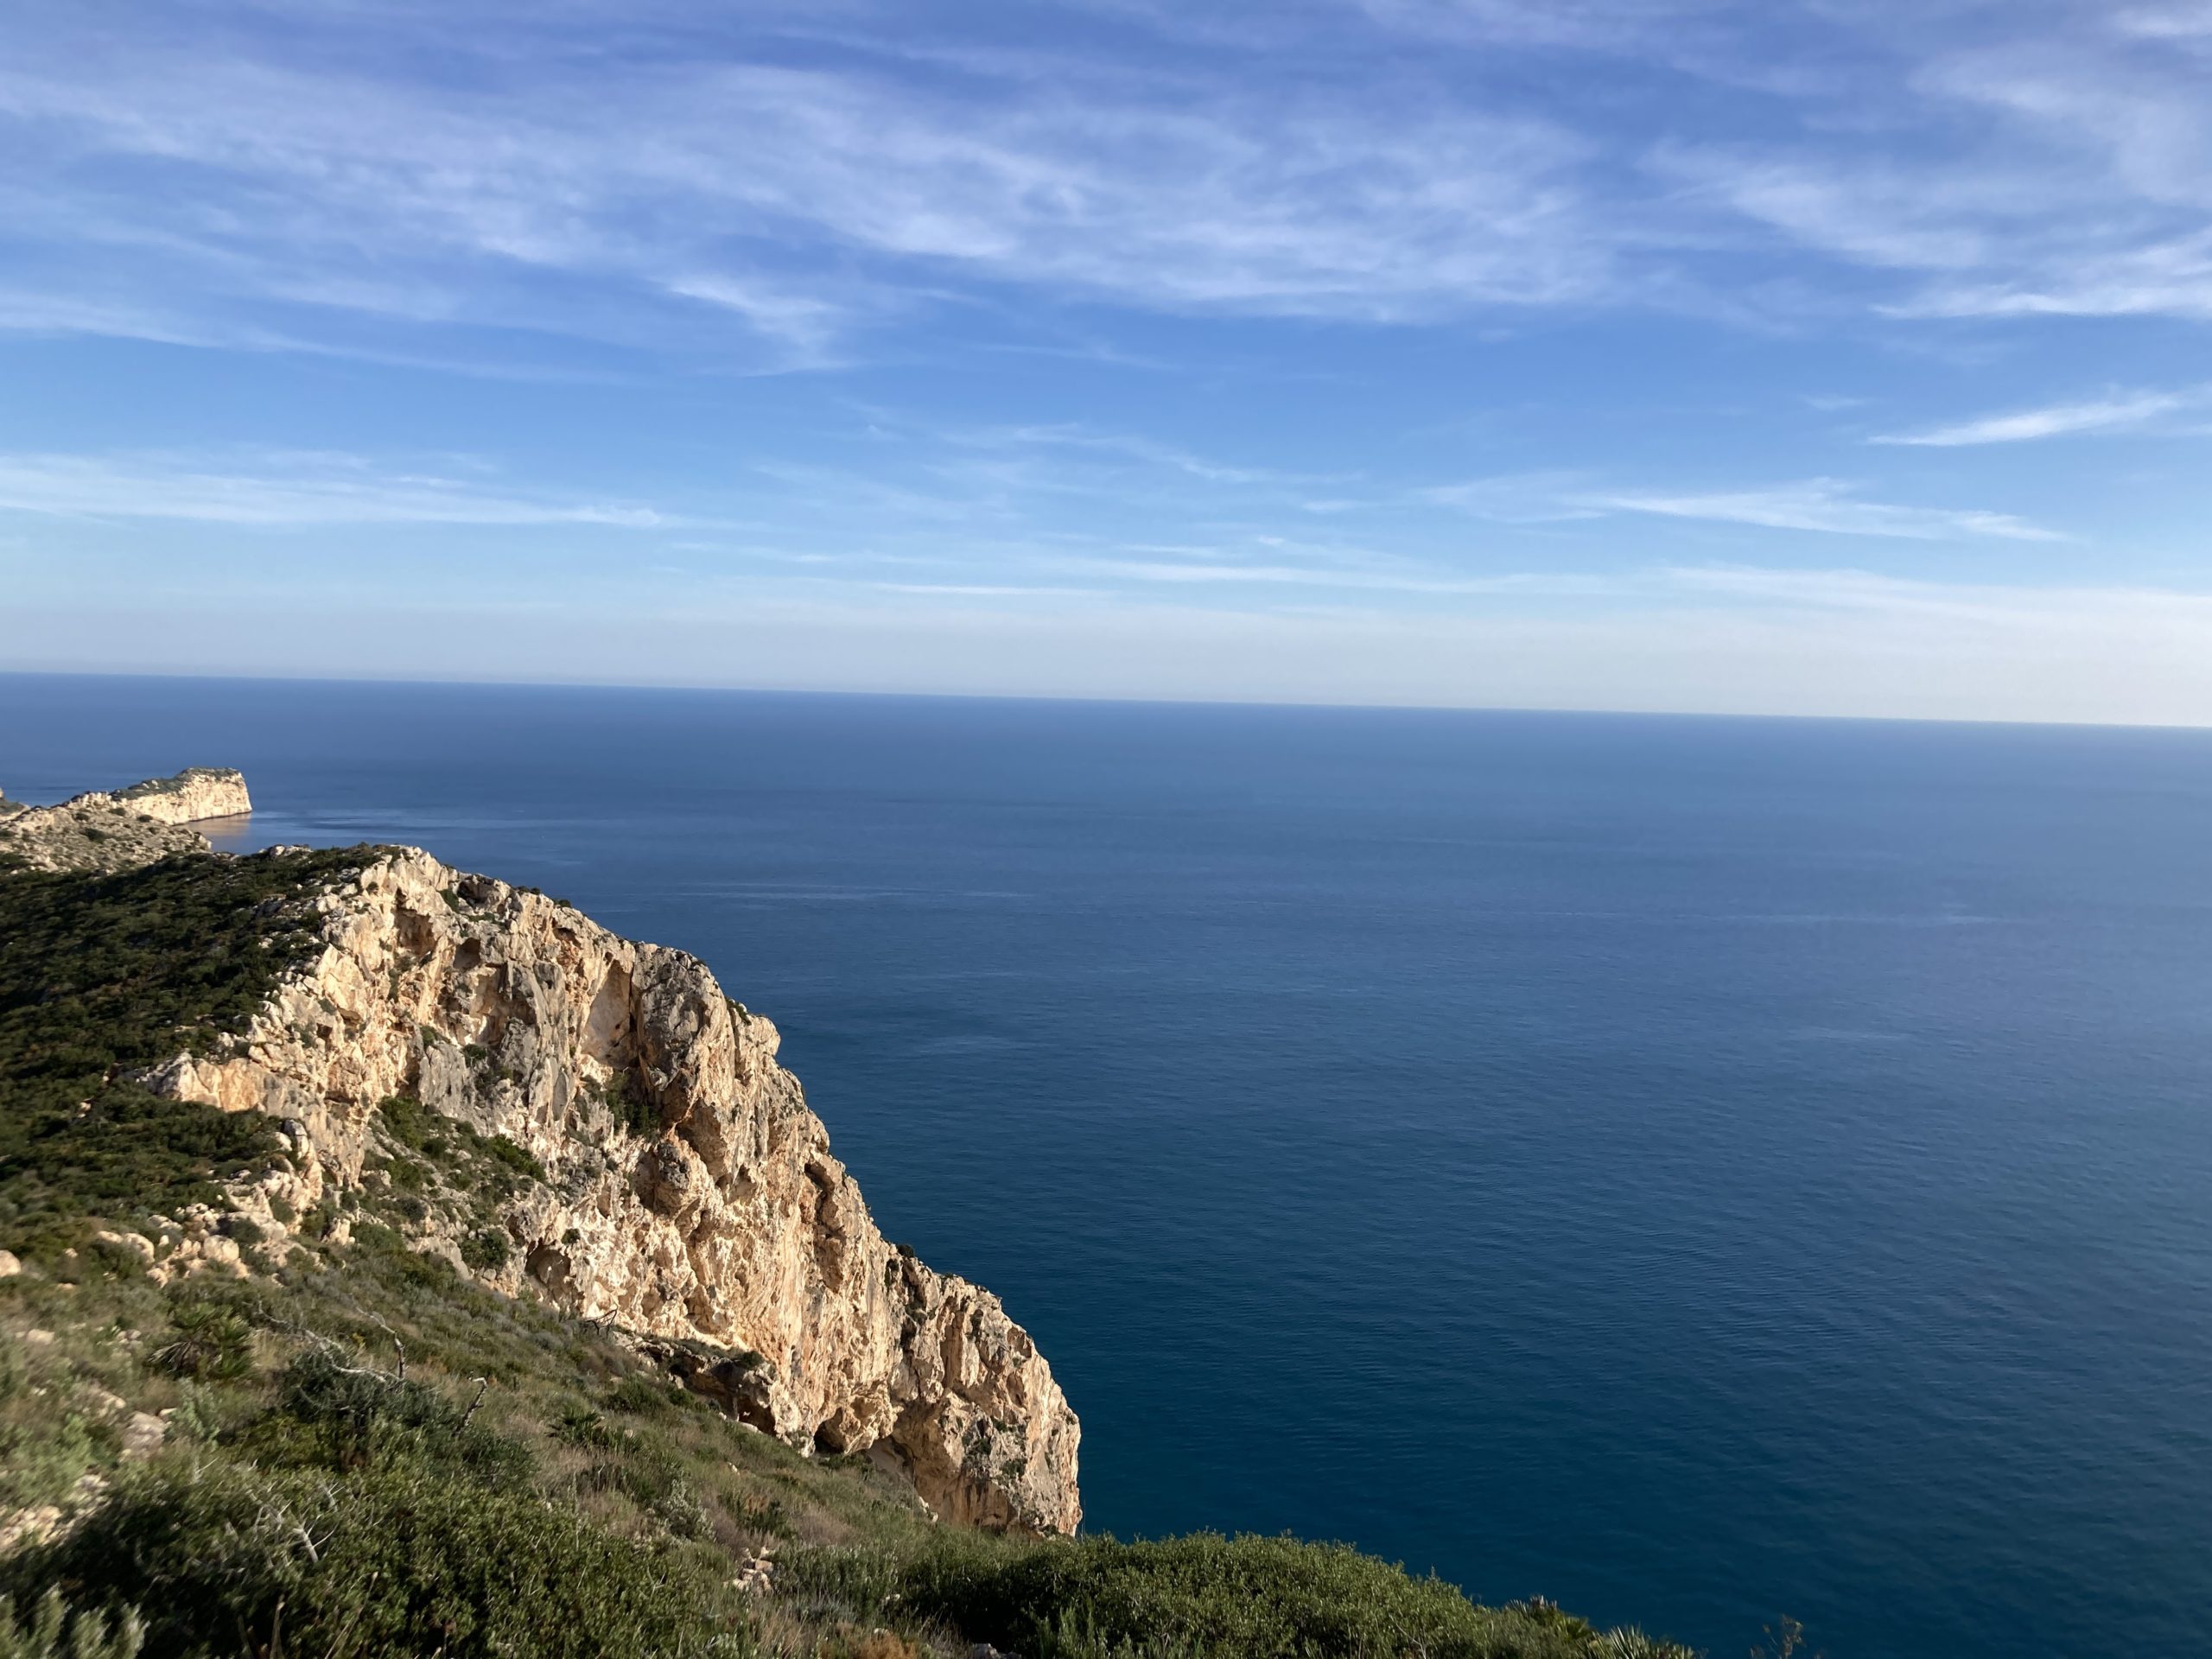 Views of the Mediterranean